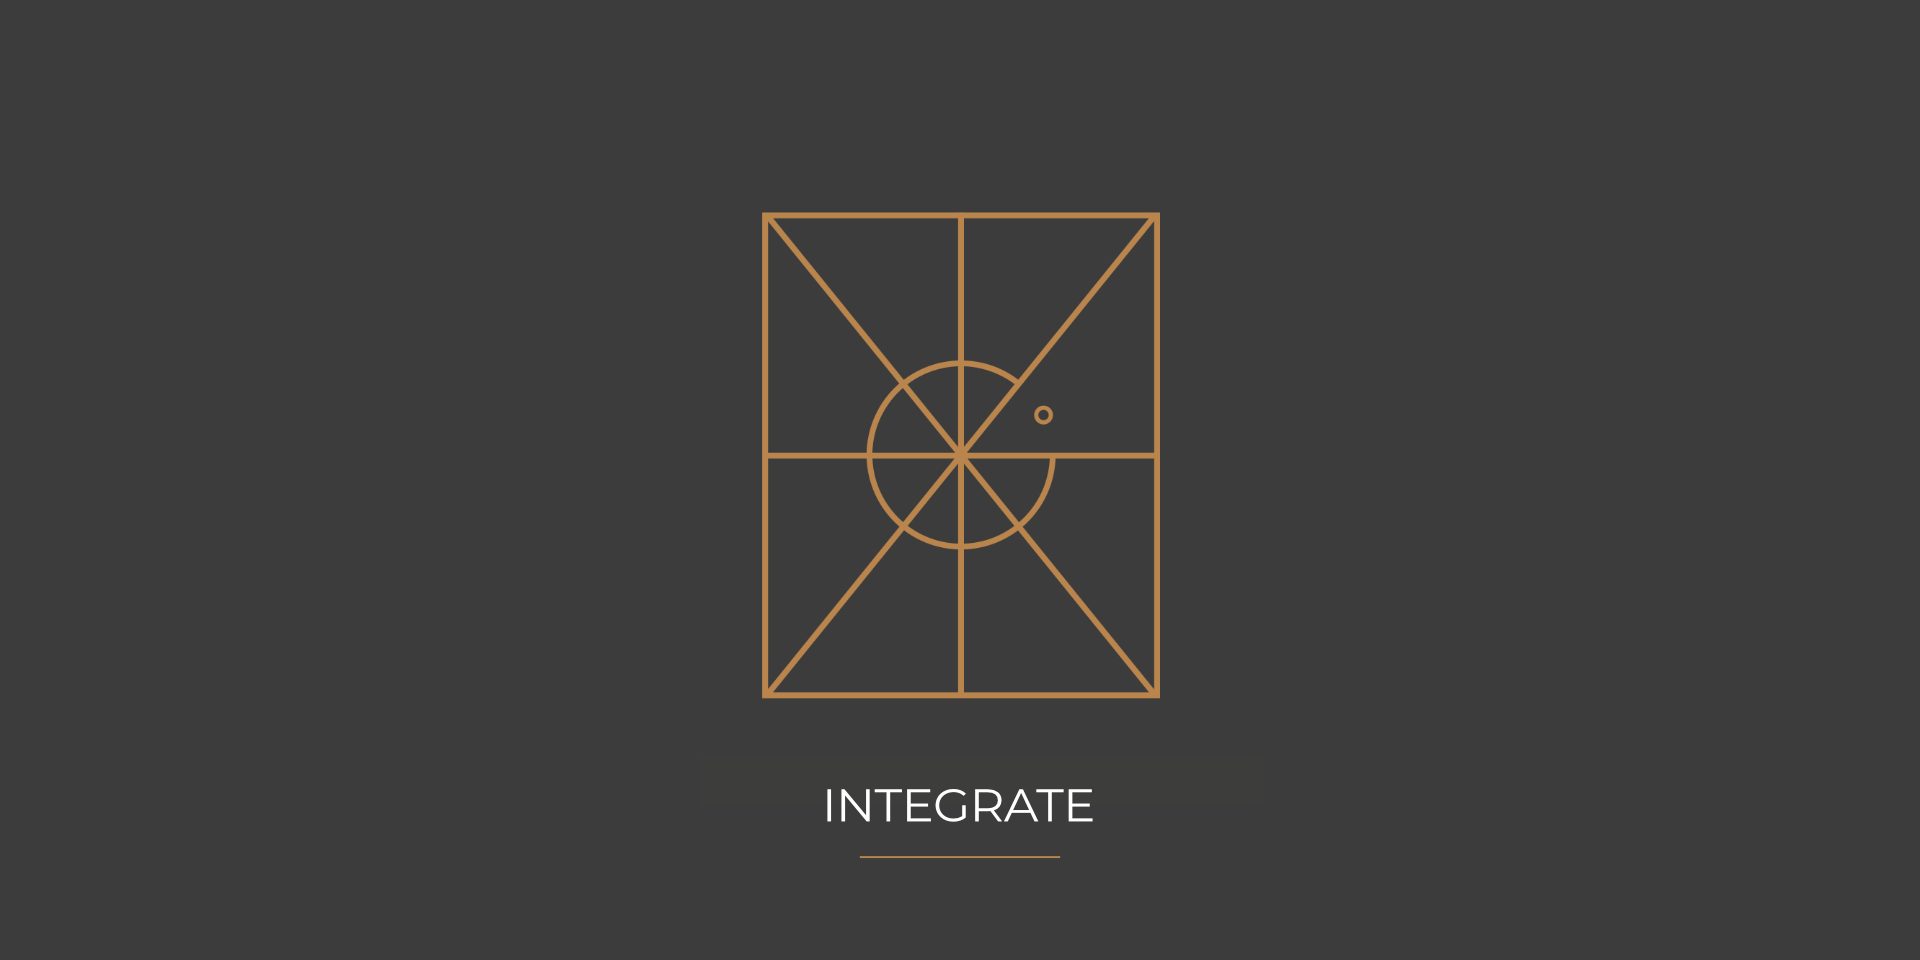 Integrate 2 homepage